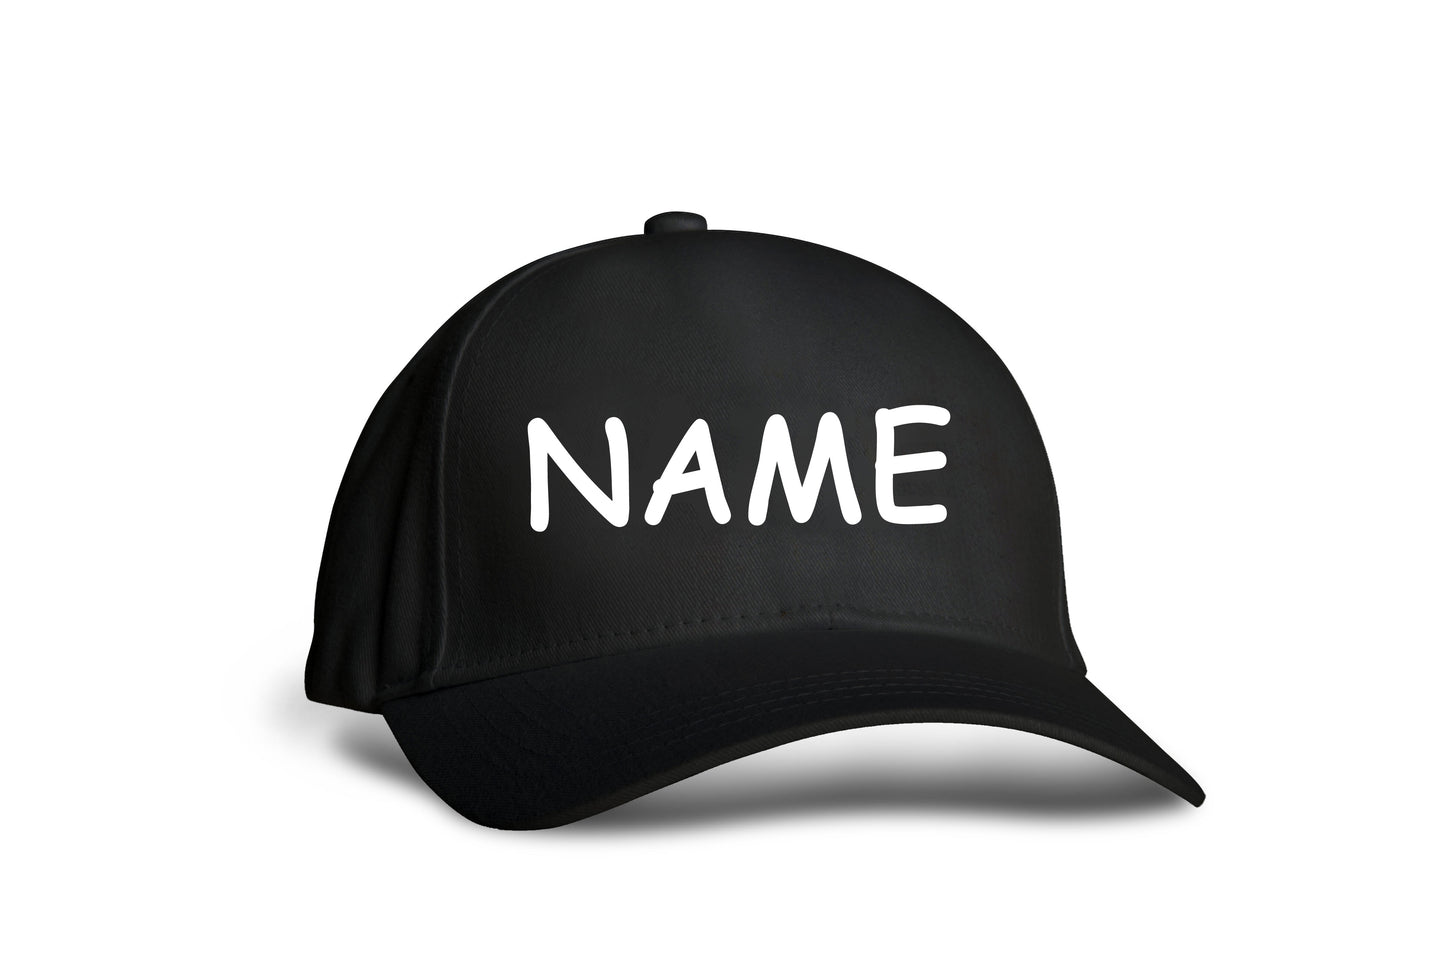 Your Name/Text | Black Printed Cap